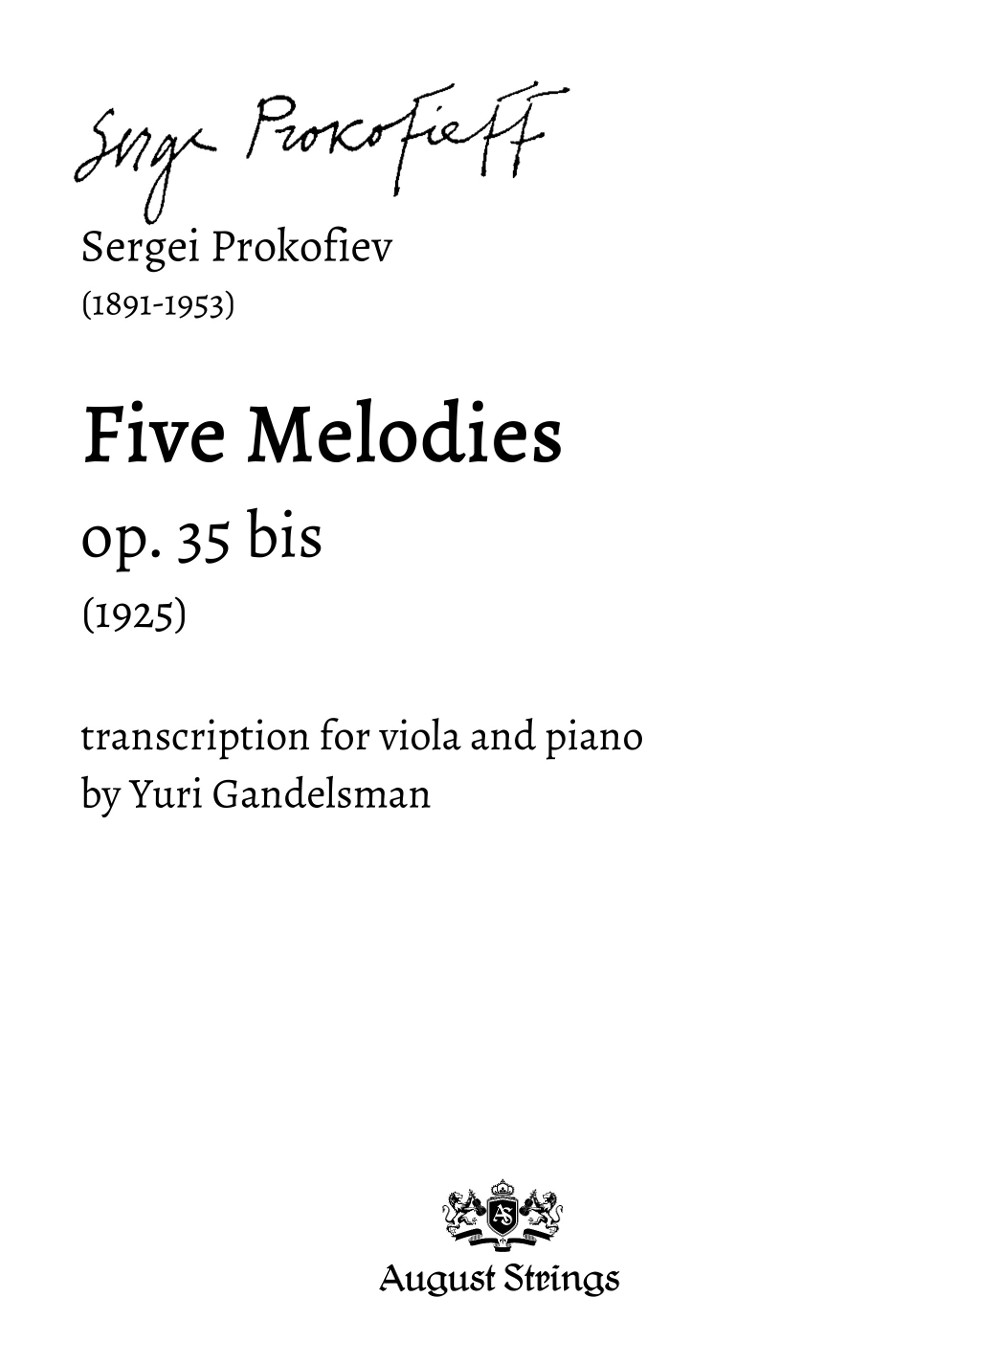 Sergei Prokofiev, 5 melodies op. 35 bis for viola and piano